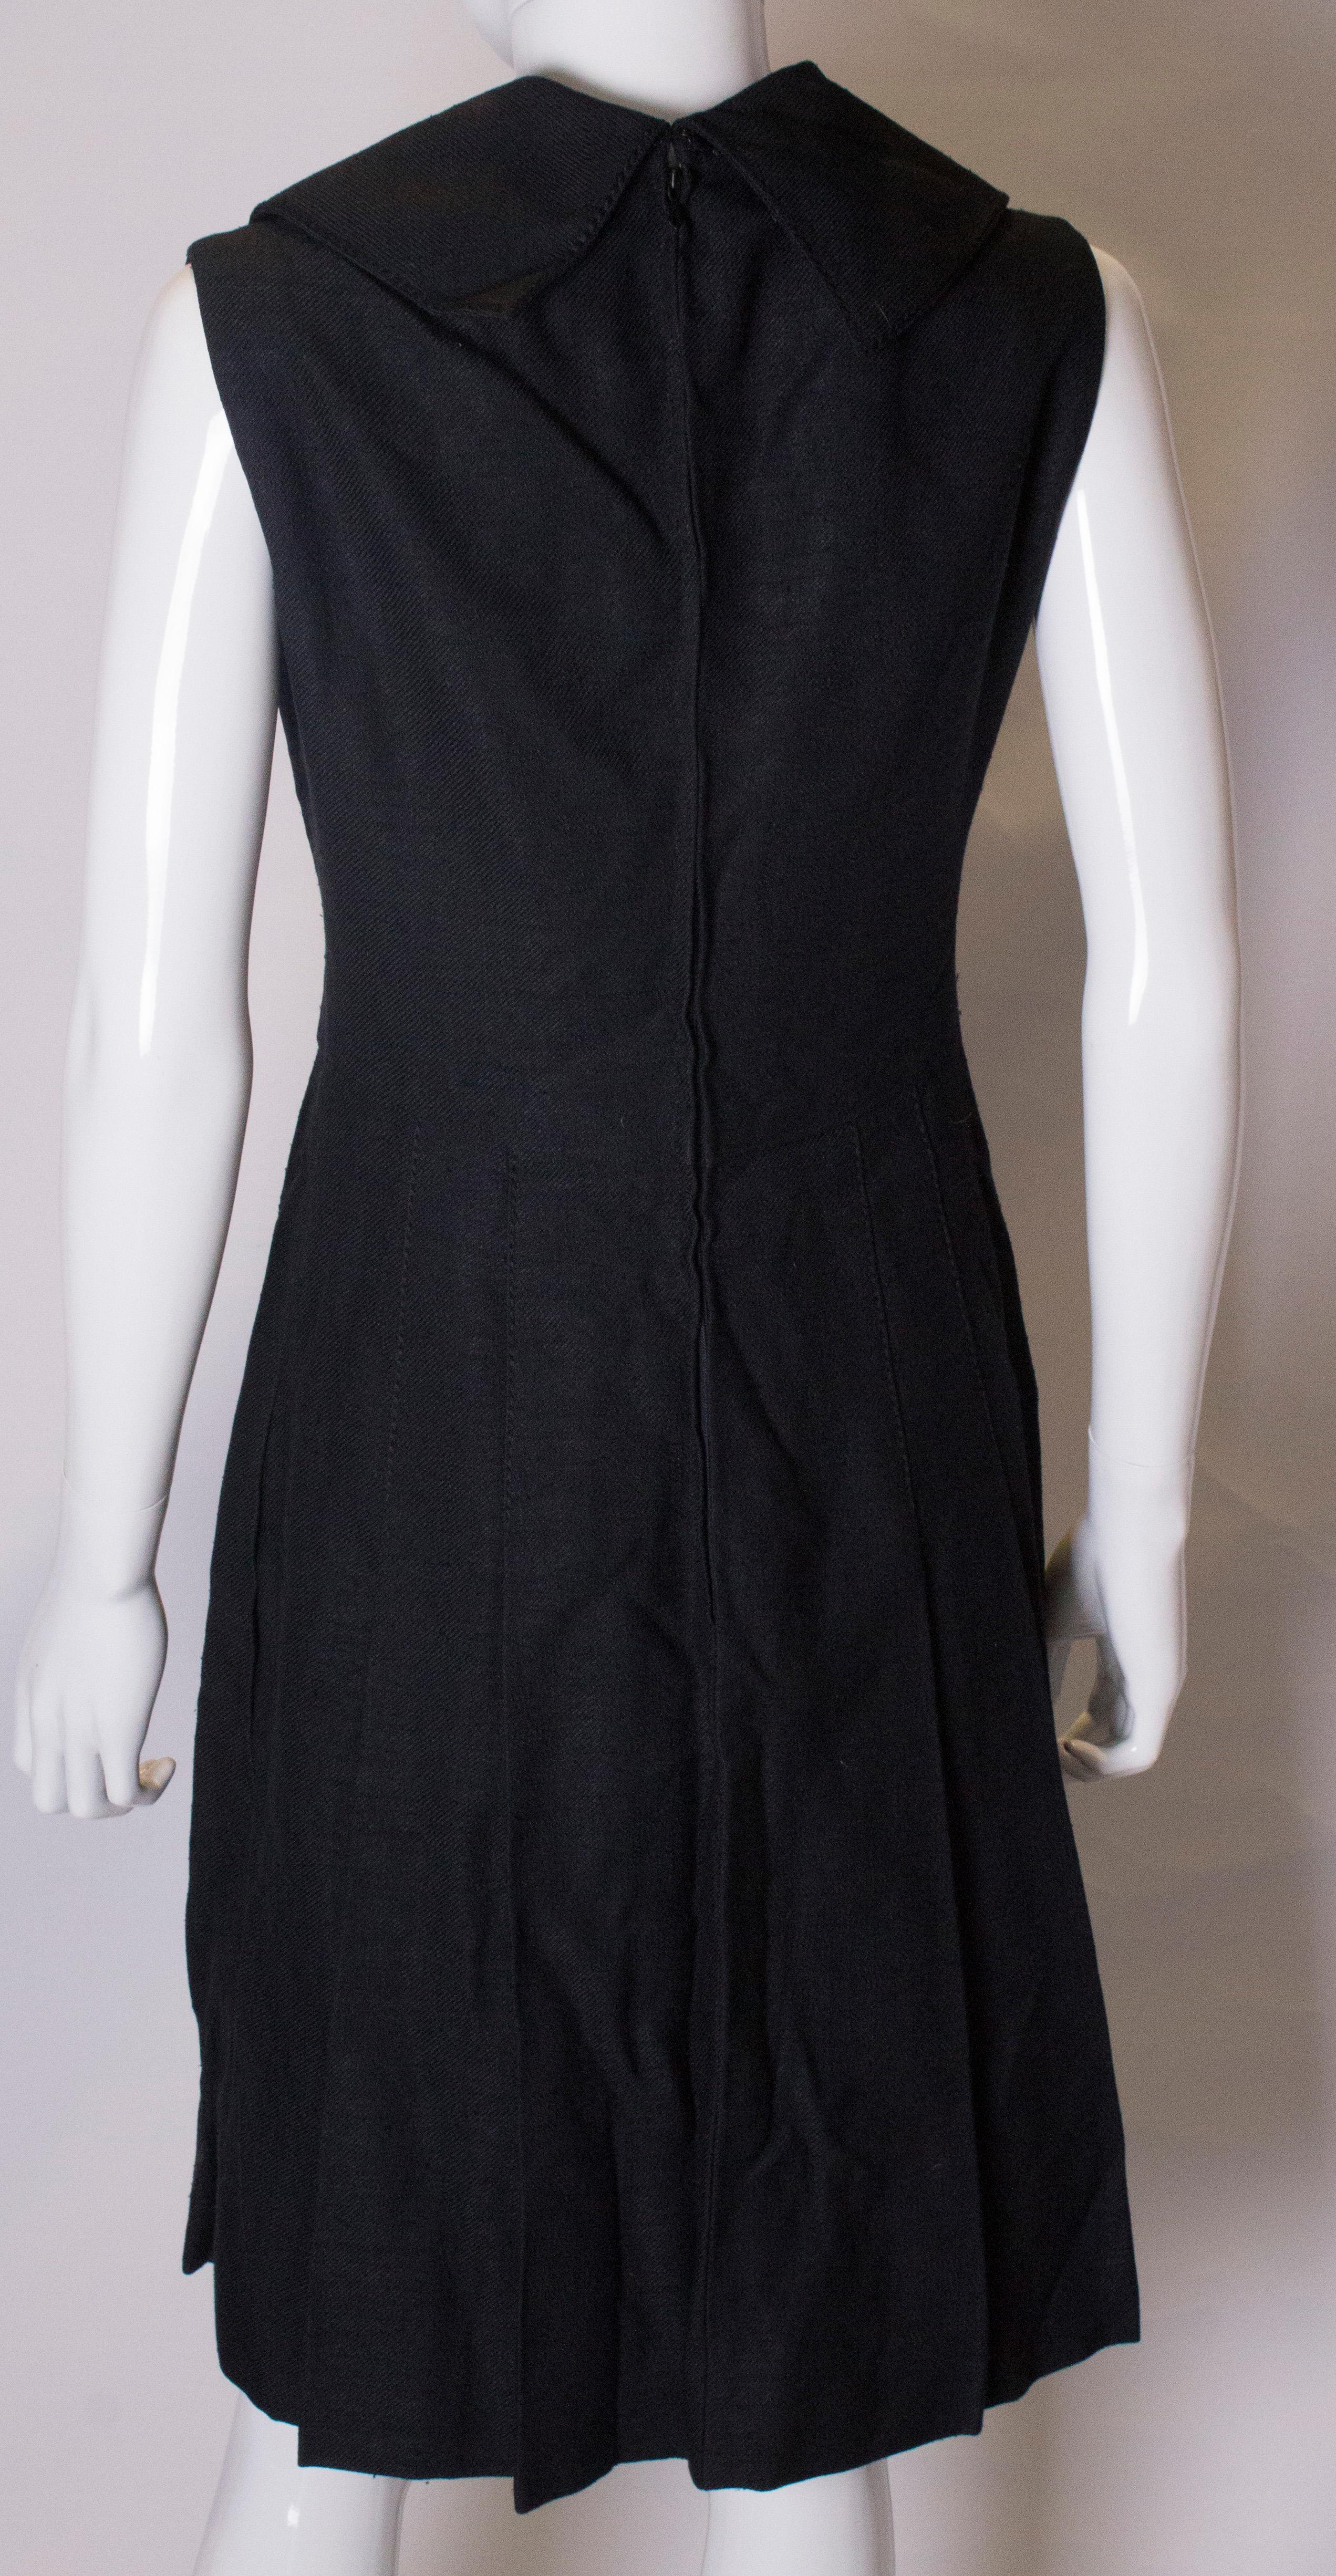 Vintage Black Dress by The Fashion Club London For Sale 2